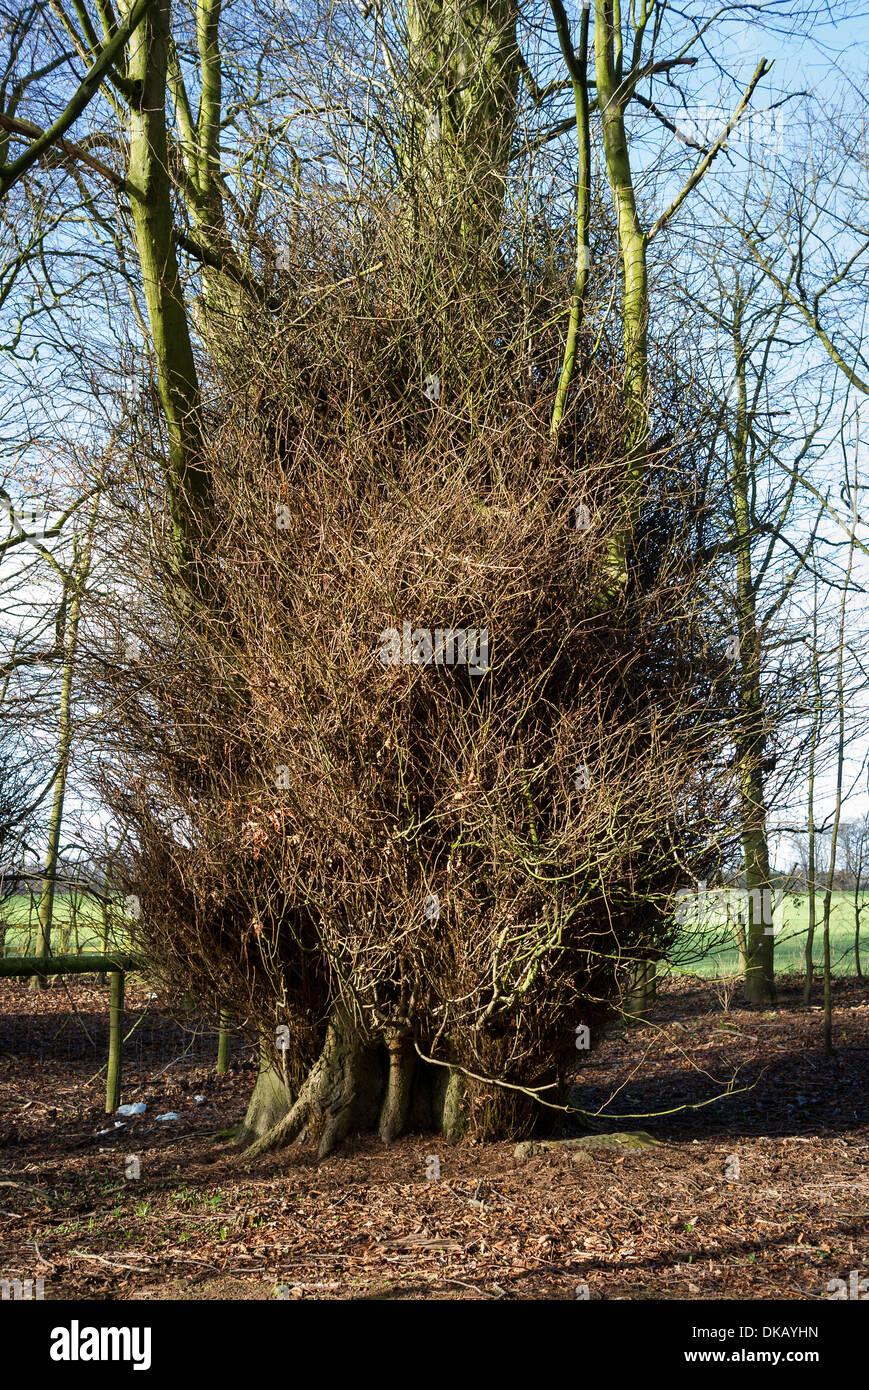 Dense basal growth at foot of a beech tree in UK Stock Photo